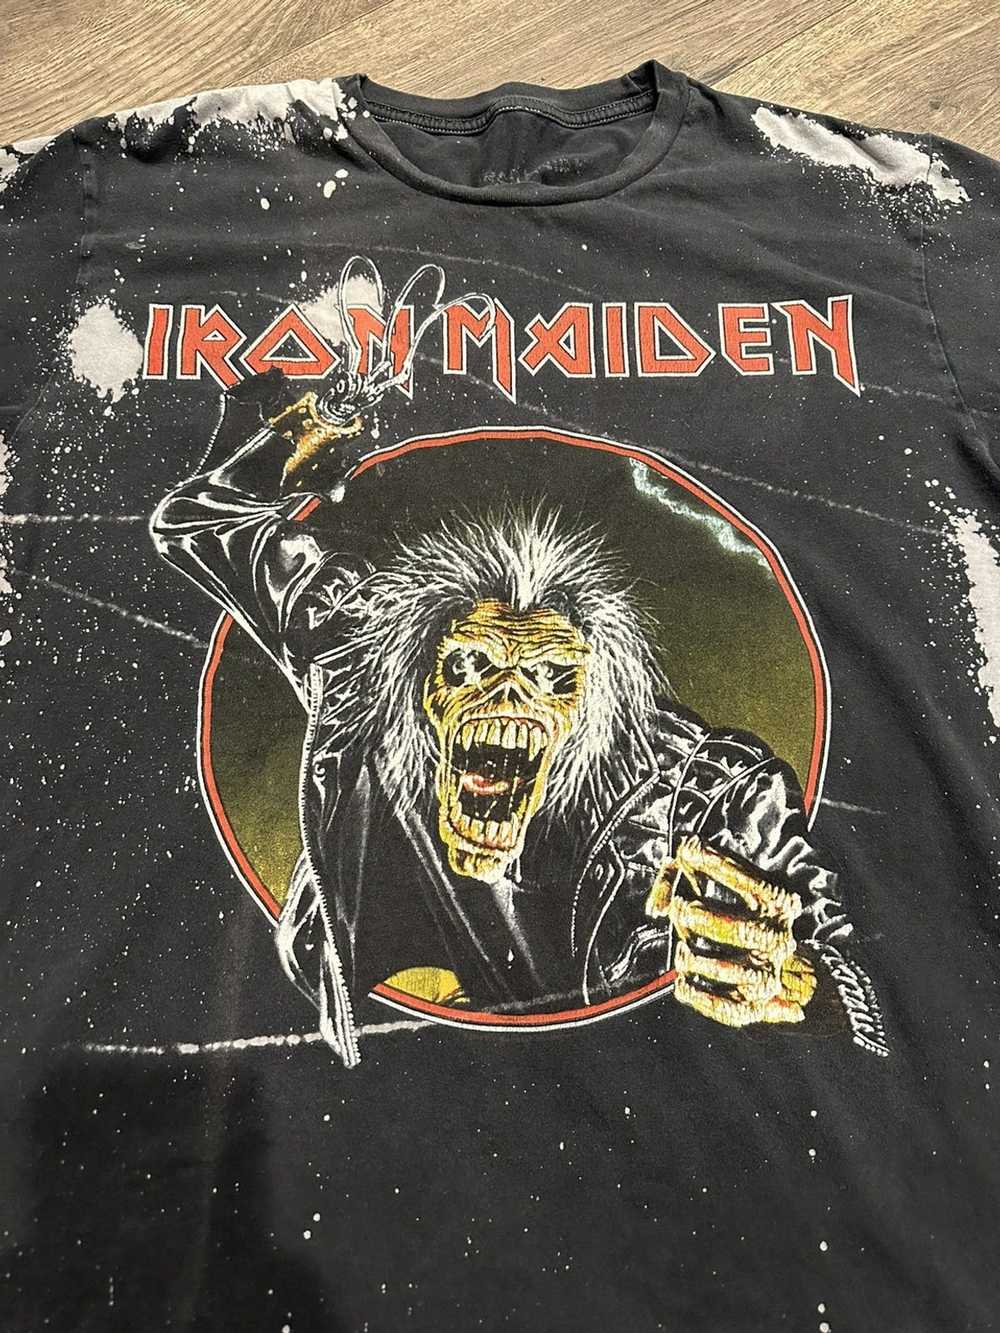 Iron Maiden Iron Maiden T-Shirt Black Large - image 1